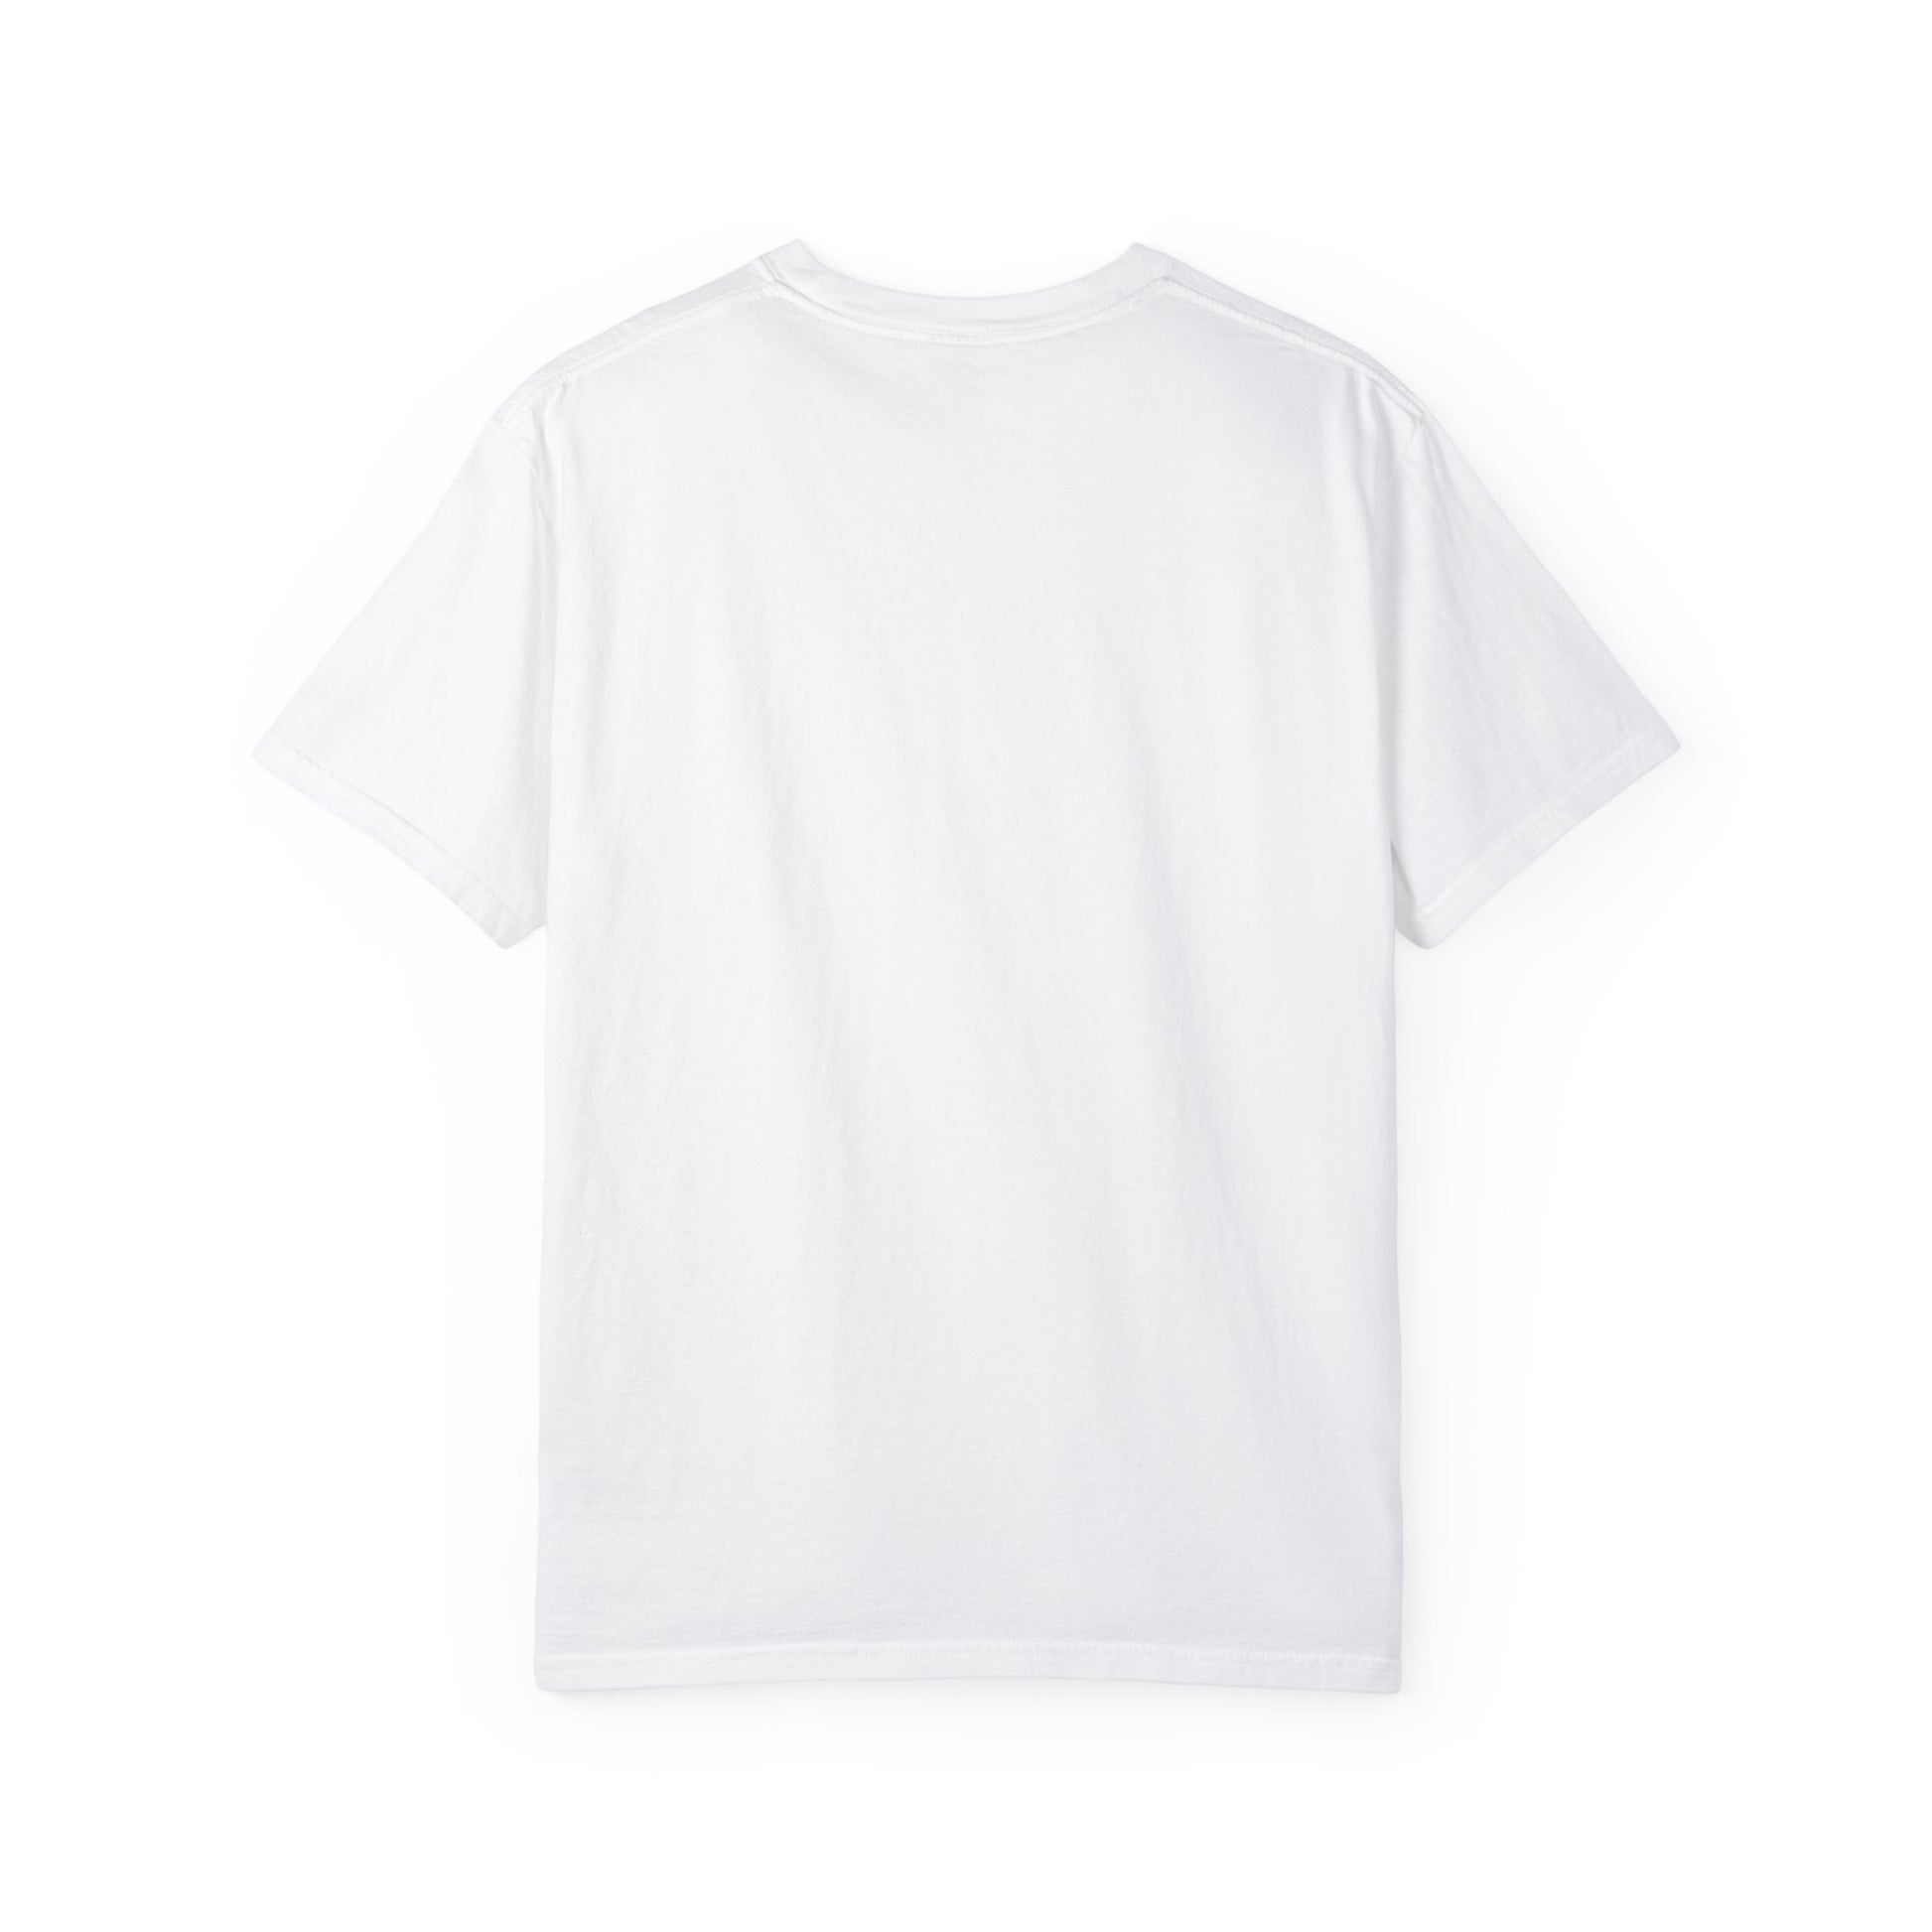 Shit Show Supervisor Urban Sarcastic Graphic Unisex Garment Dyed T-shirt Cotton Funny Humorous Graphic Soft Premium Unisex Men Women White T-shirt Birthday Gift-22